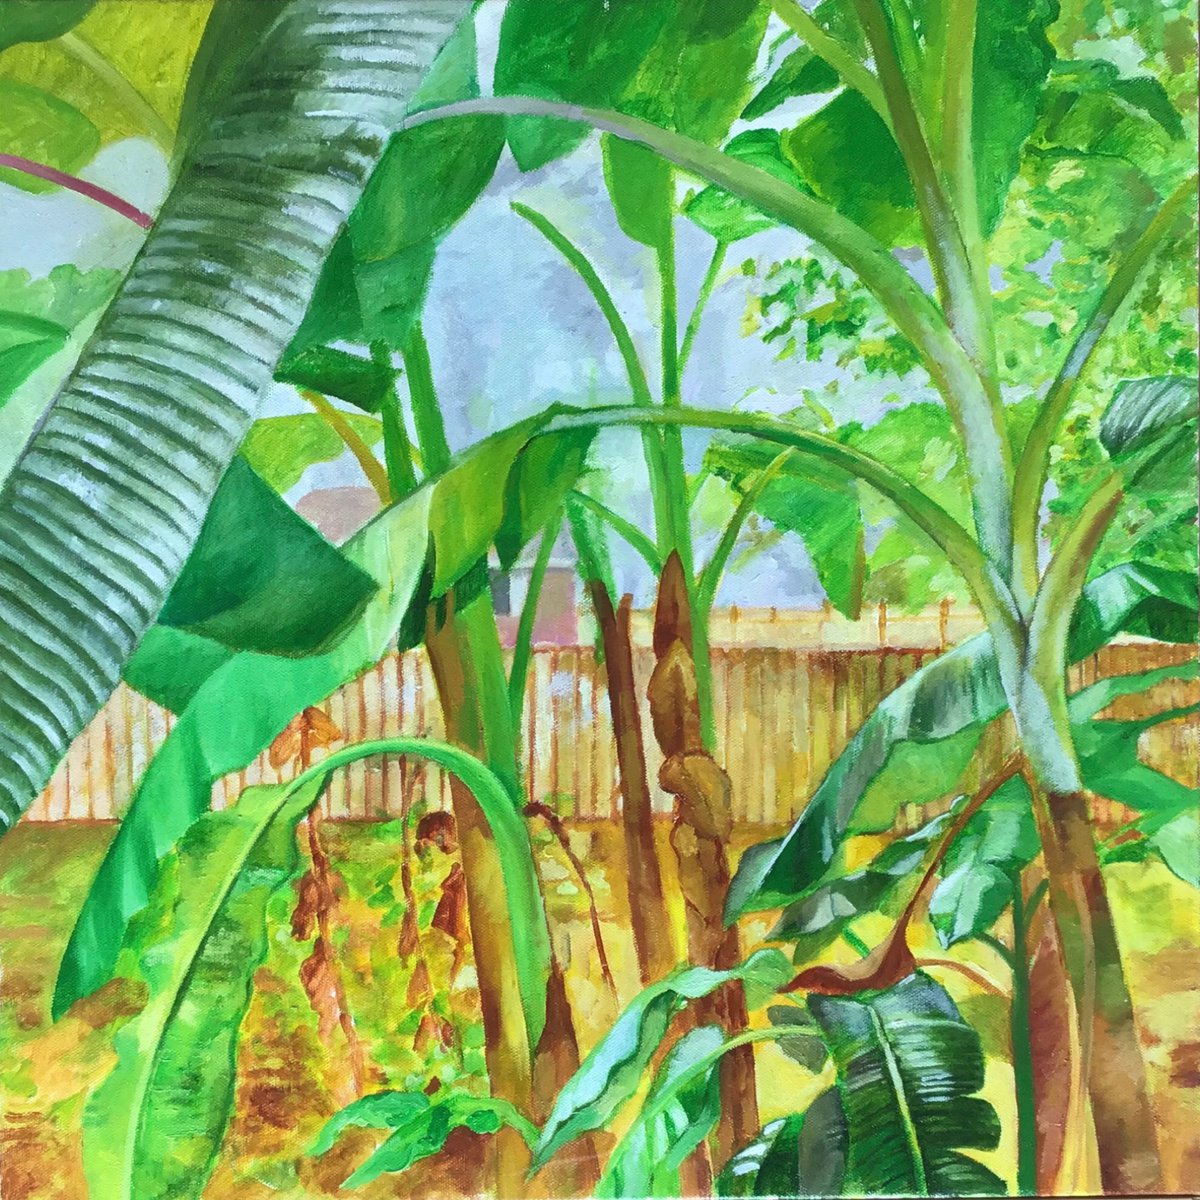 Backyard Banana Trees by Joseph Roache